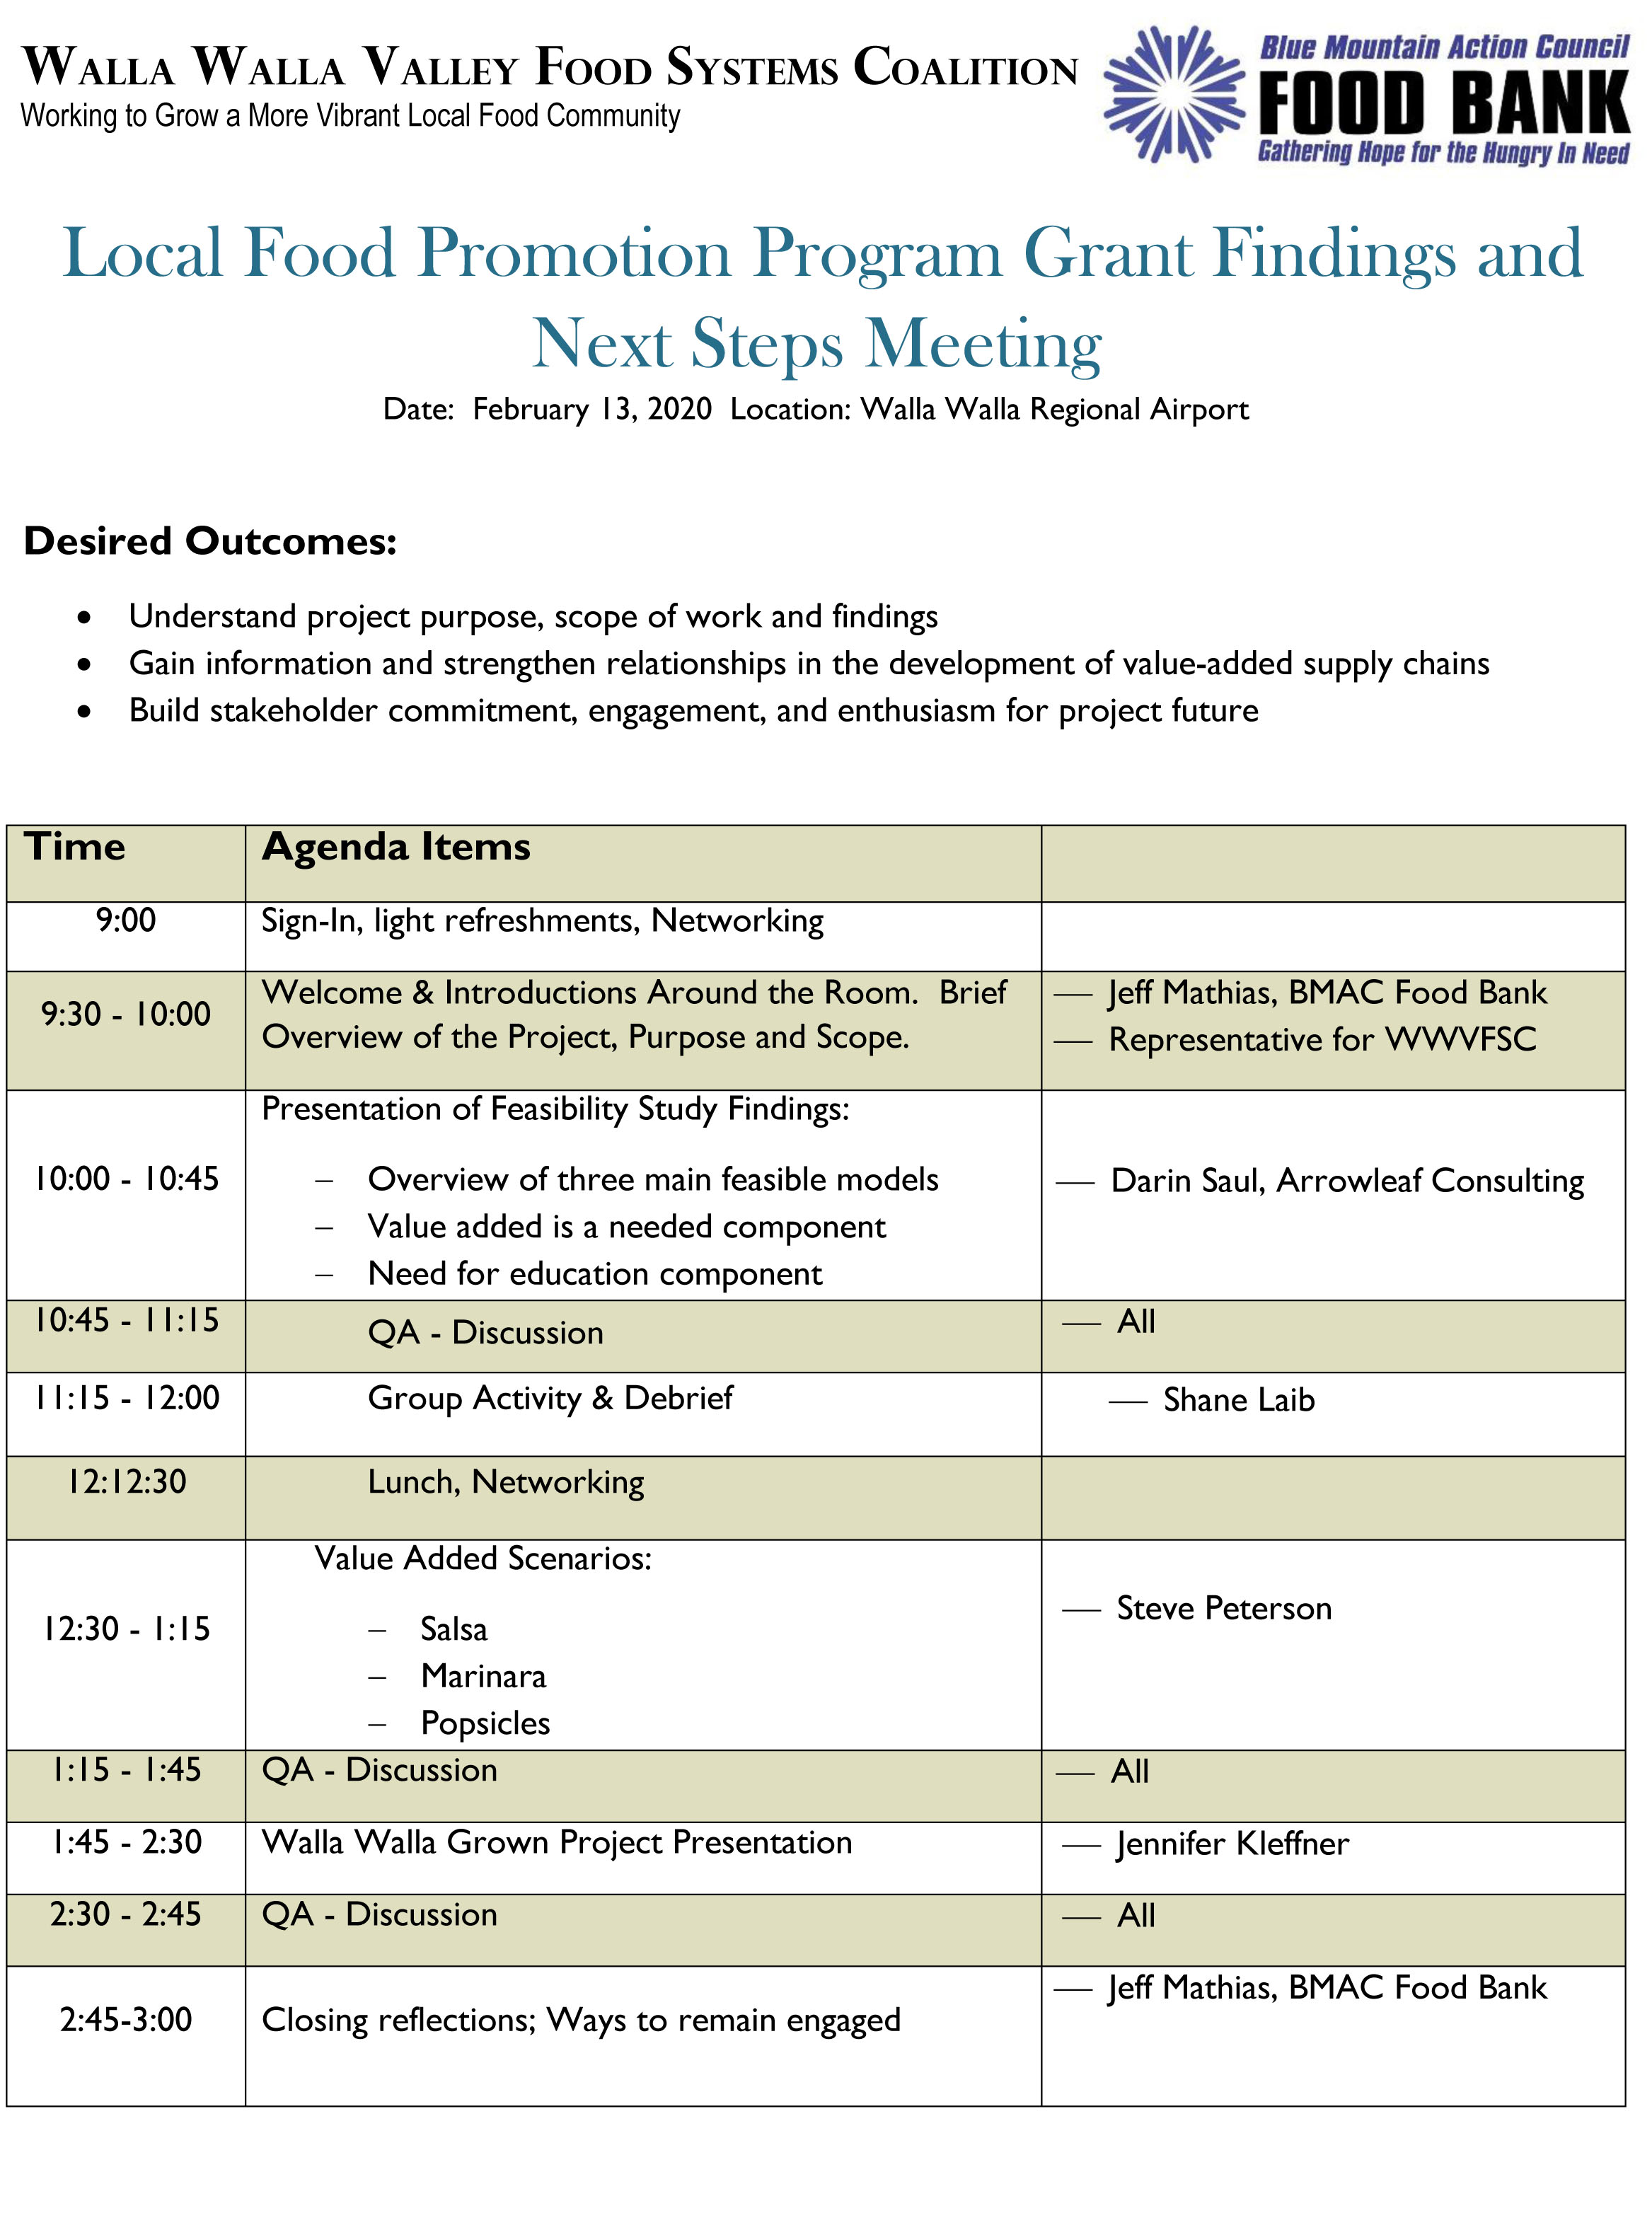 WWLFPP Meeting 2-13-20 event agenda draft